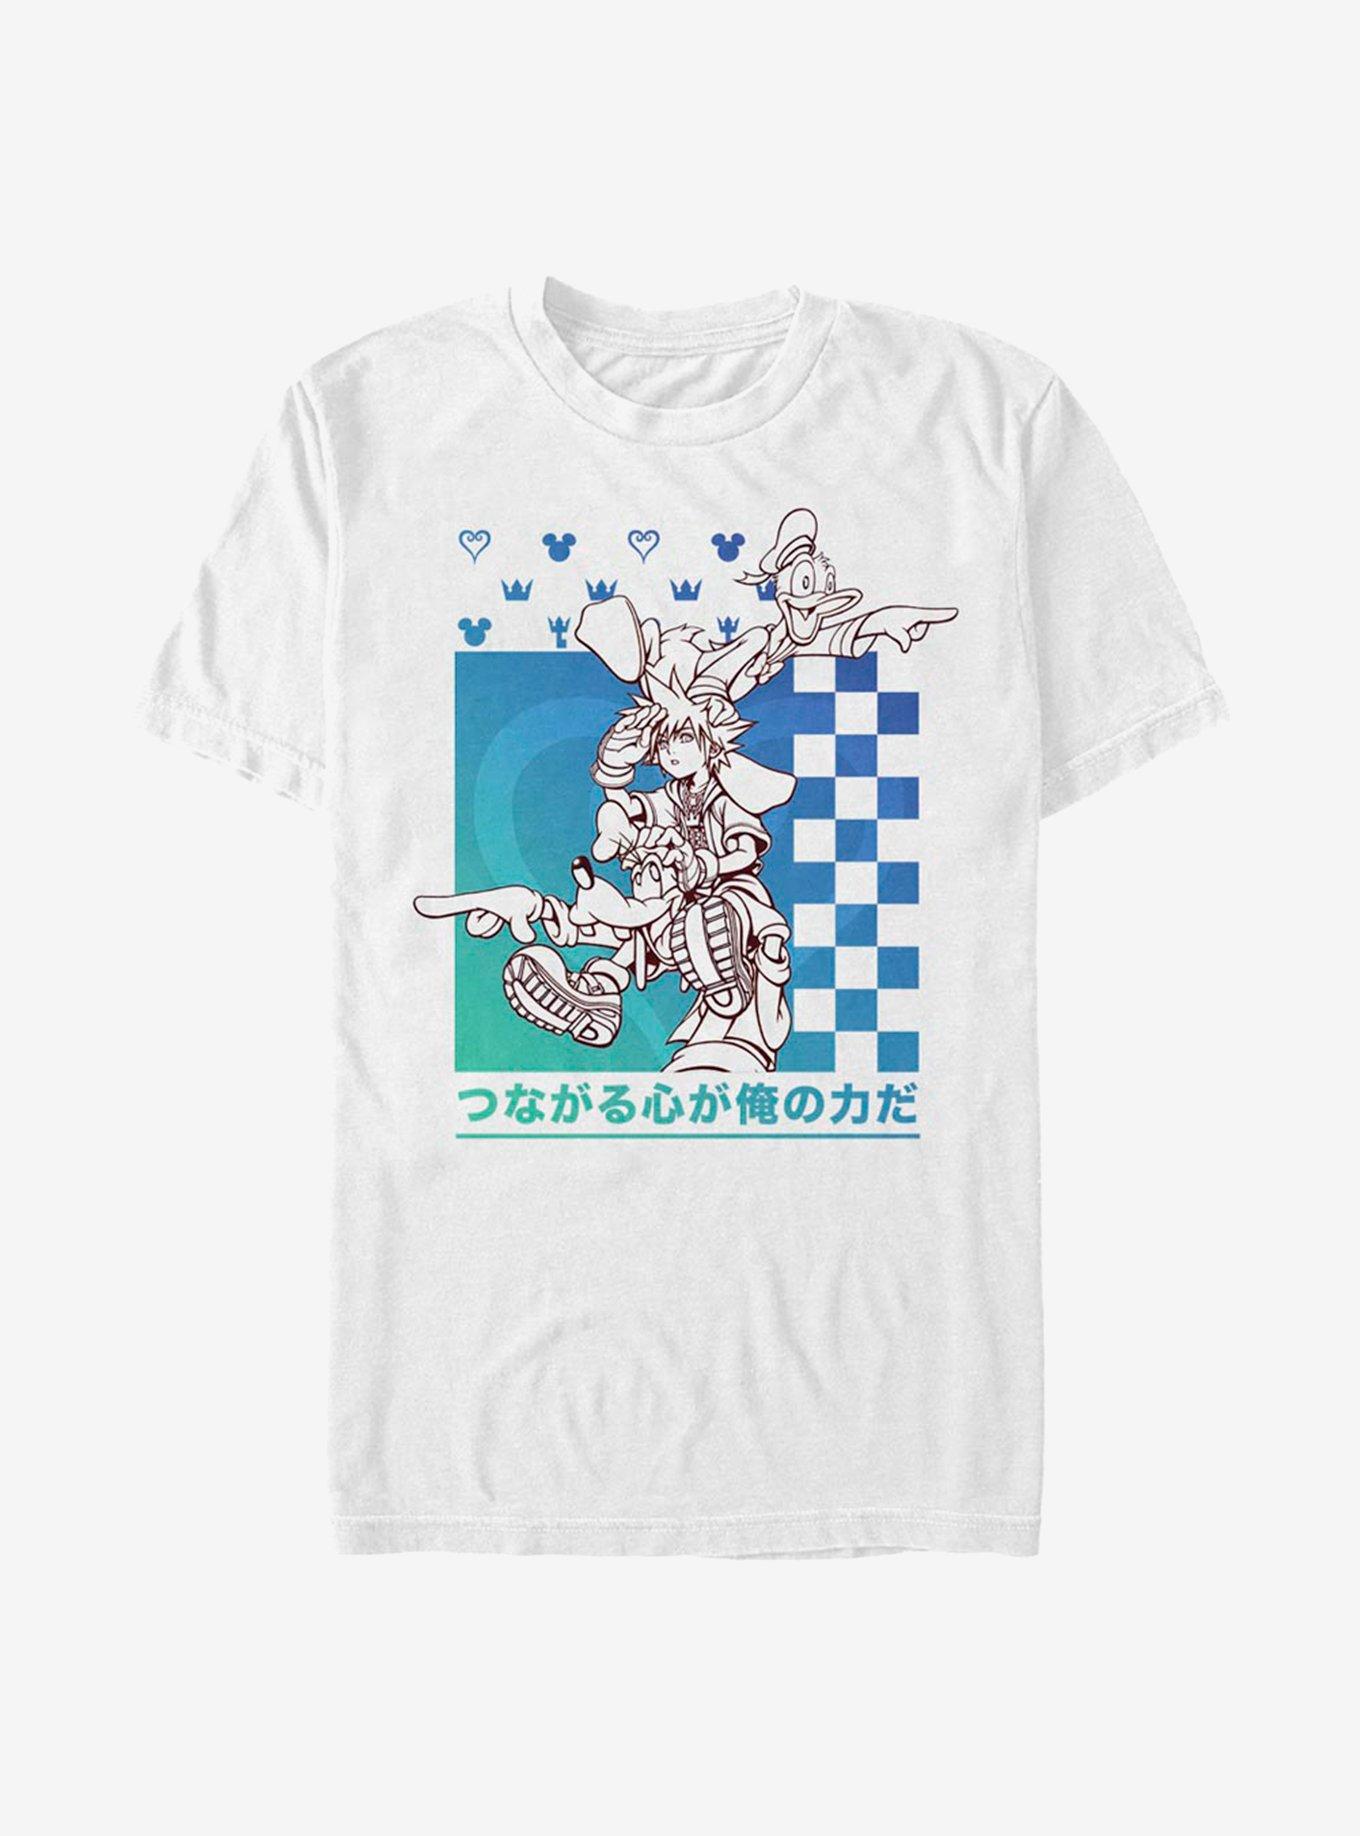 Disney Kingdom Hearts Power Friends T Shirt White Boxlunch